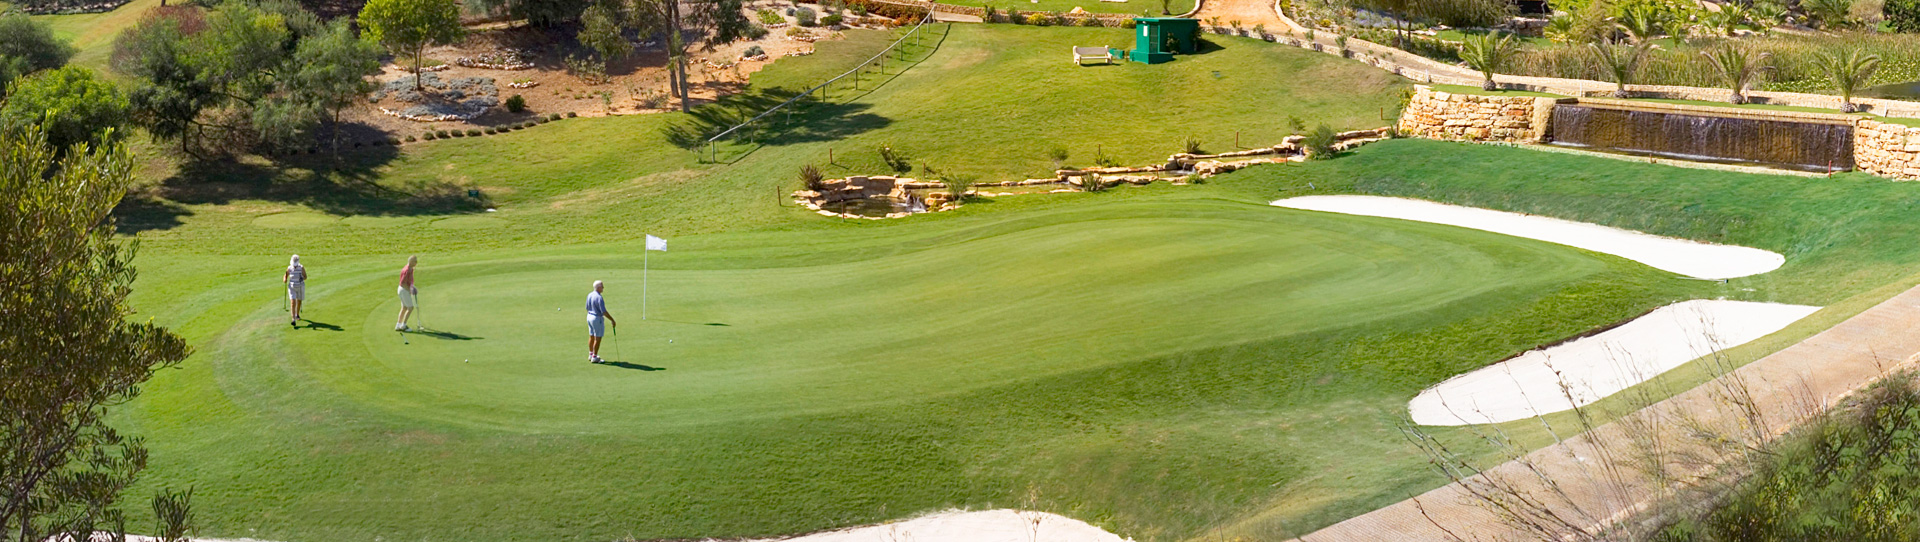 Portugal golf courses - Santo Antonio Golf  - Photo 1